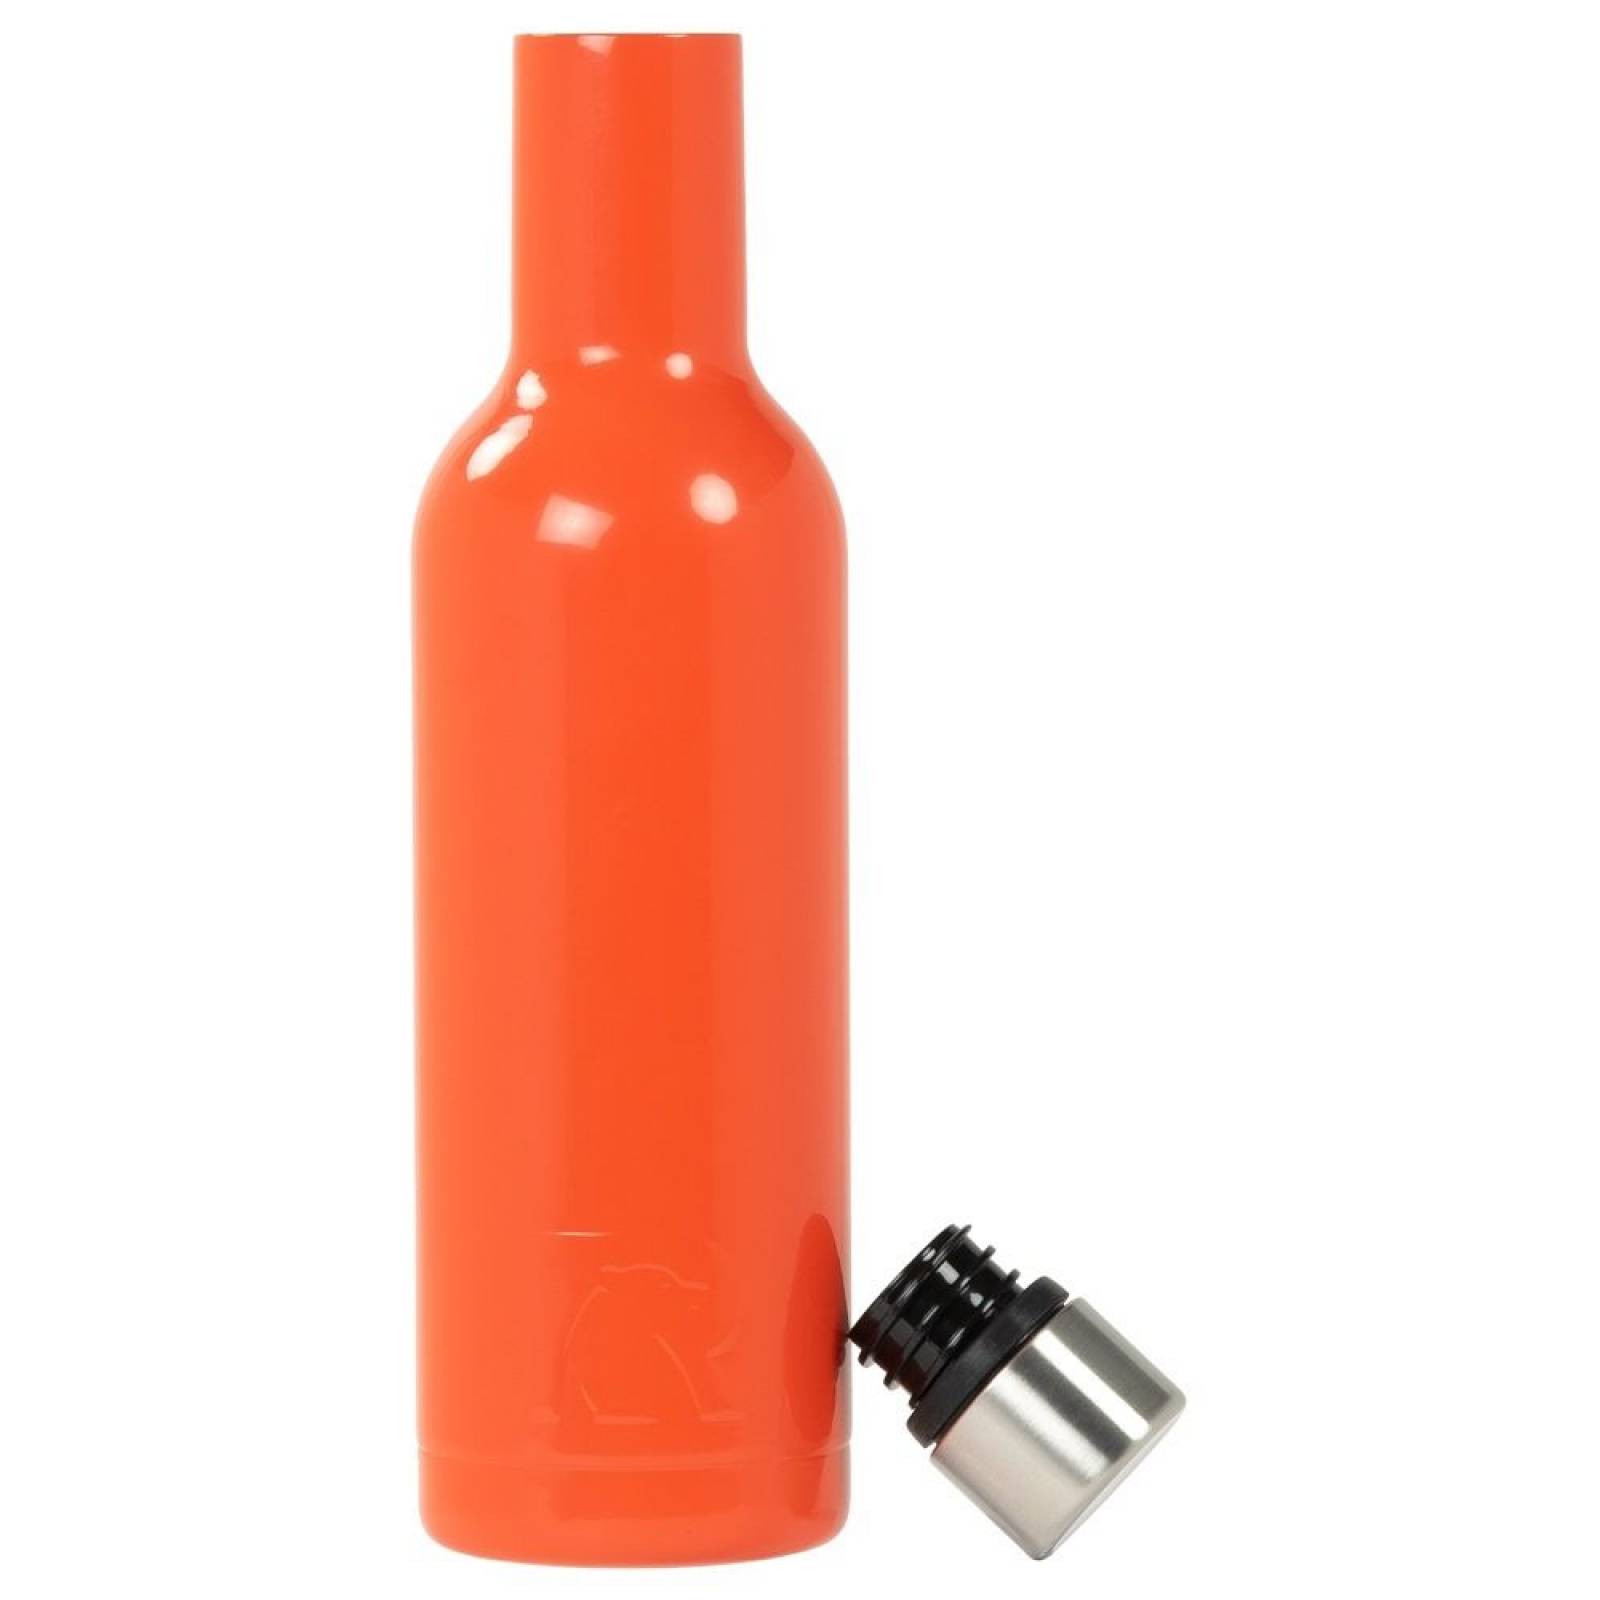 RTIC Wine 375 ml. Orange   851